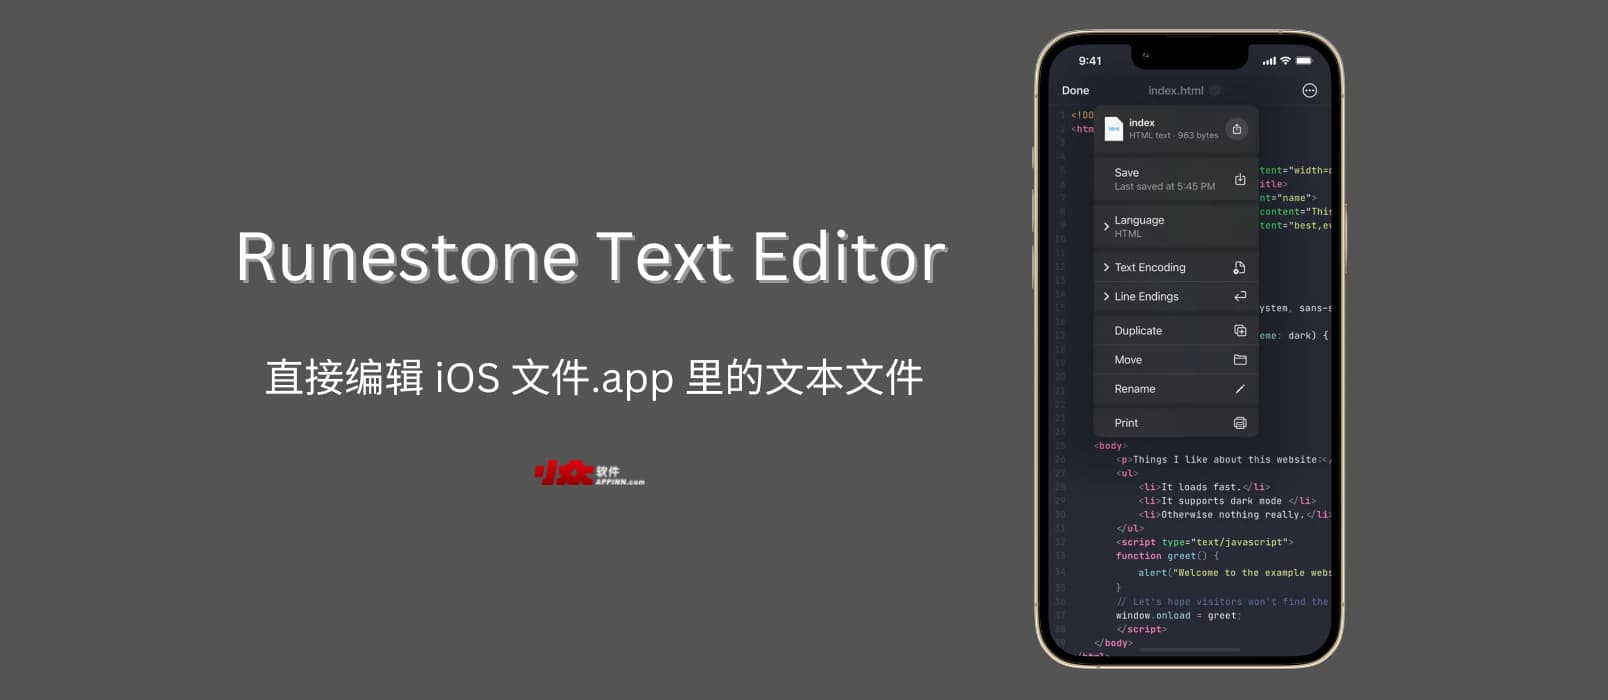 Runestone Text Editor - 文本编辑器：直接编辑 iOS 文件.app 里的文本文件